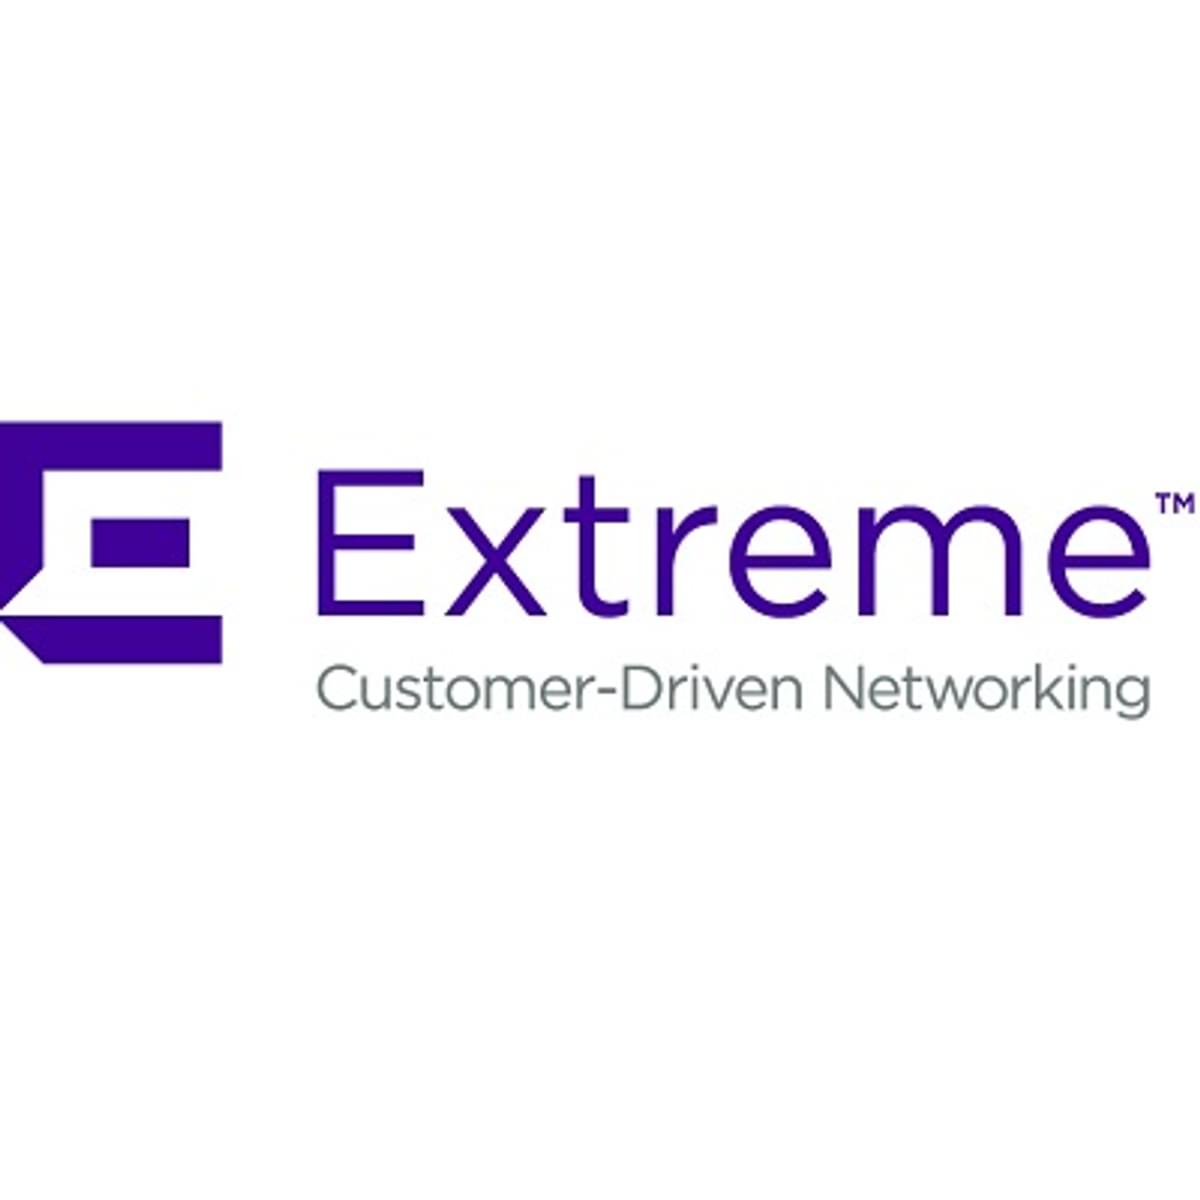 John Abel benoemd tot CIO bij Extreme Networks image